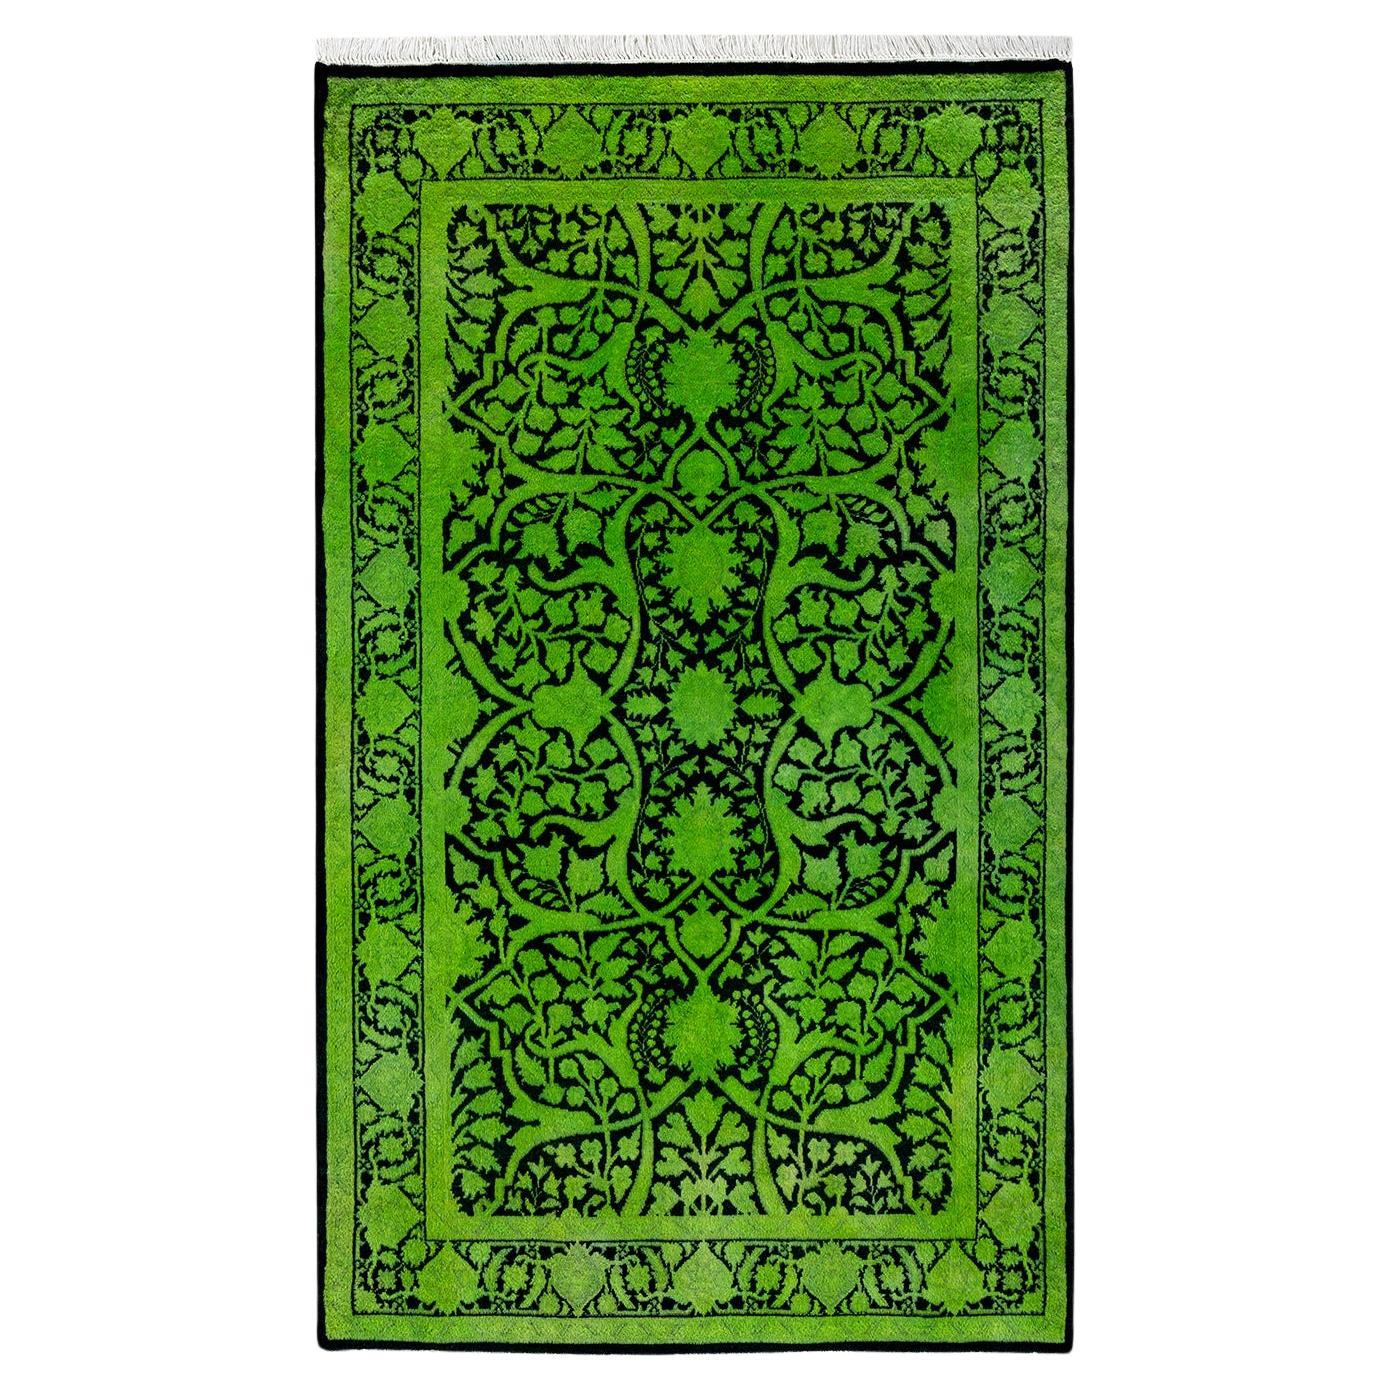 Contemporary Overdyed Hand Knotted Wool Green Area Rug (tapis en laine surteinte nouée à la main)